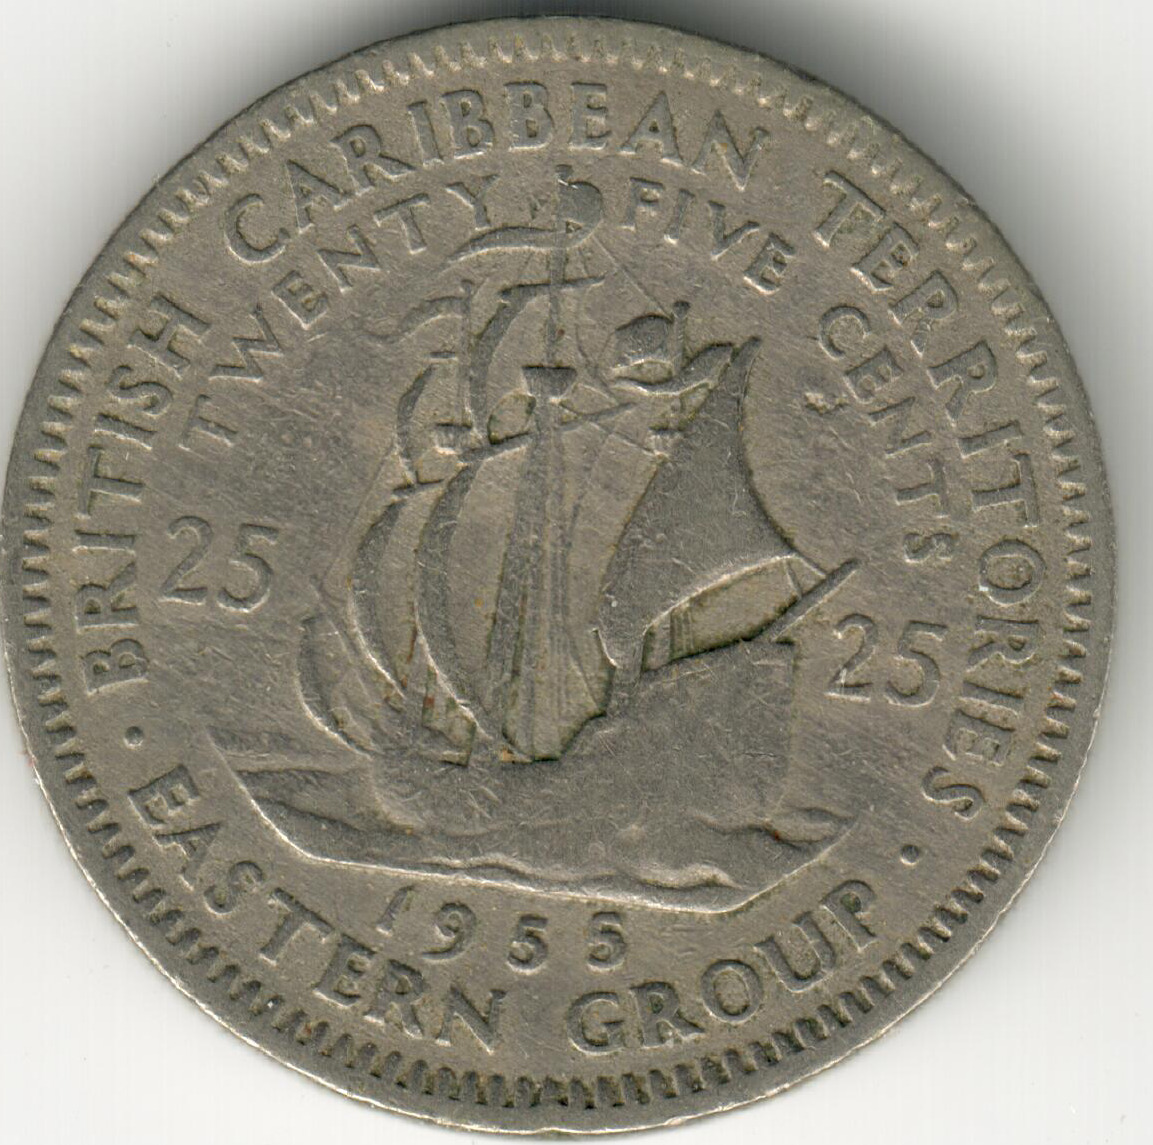 Eastern Caribbean States - 1955L 25 Cents - Elizabeth II 1st portrait - #01